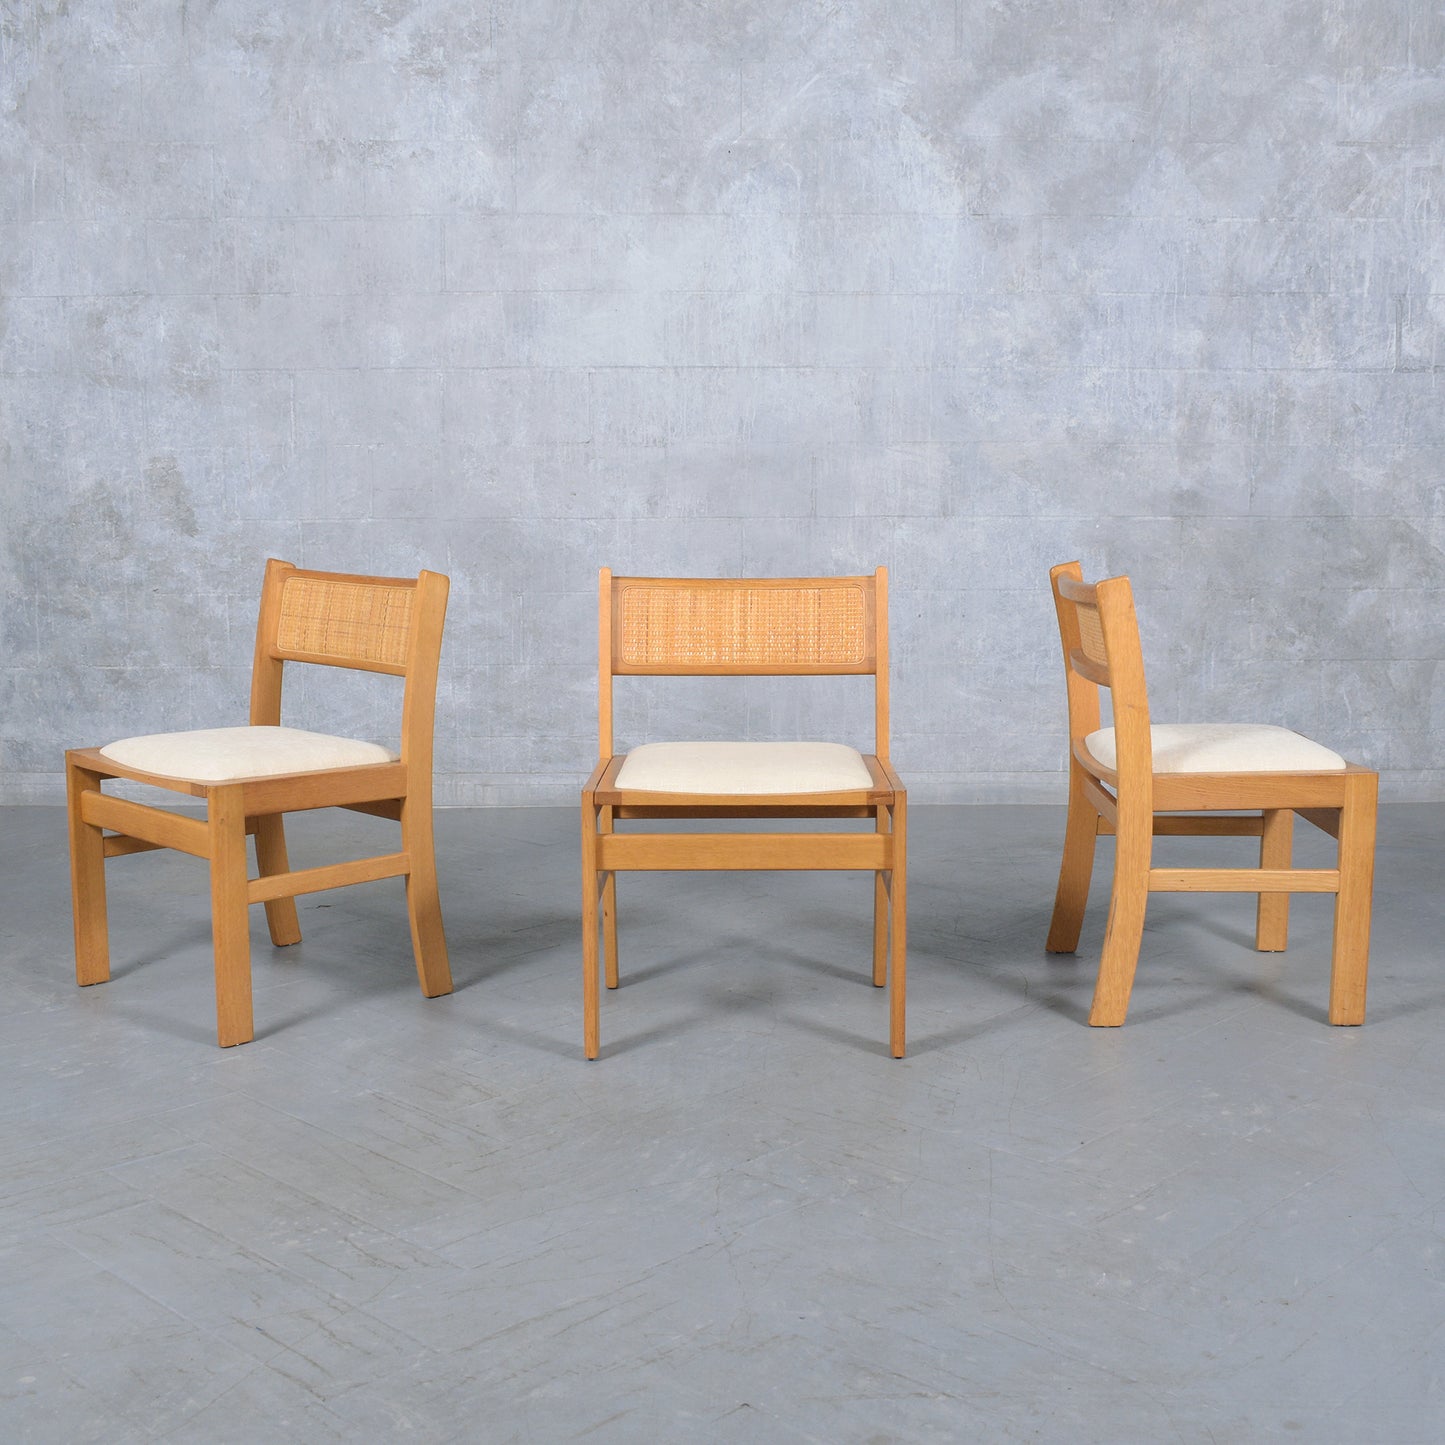 Set of Six Modern Danish Teak Dining Chairs: Mid-Century Elegance Restored